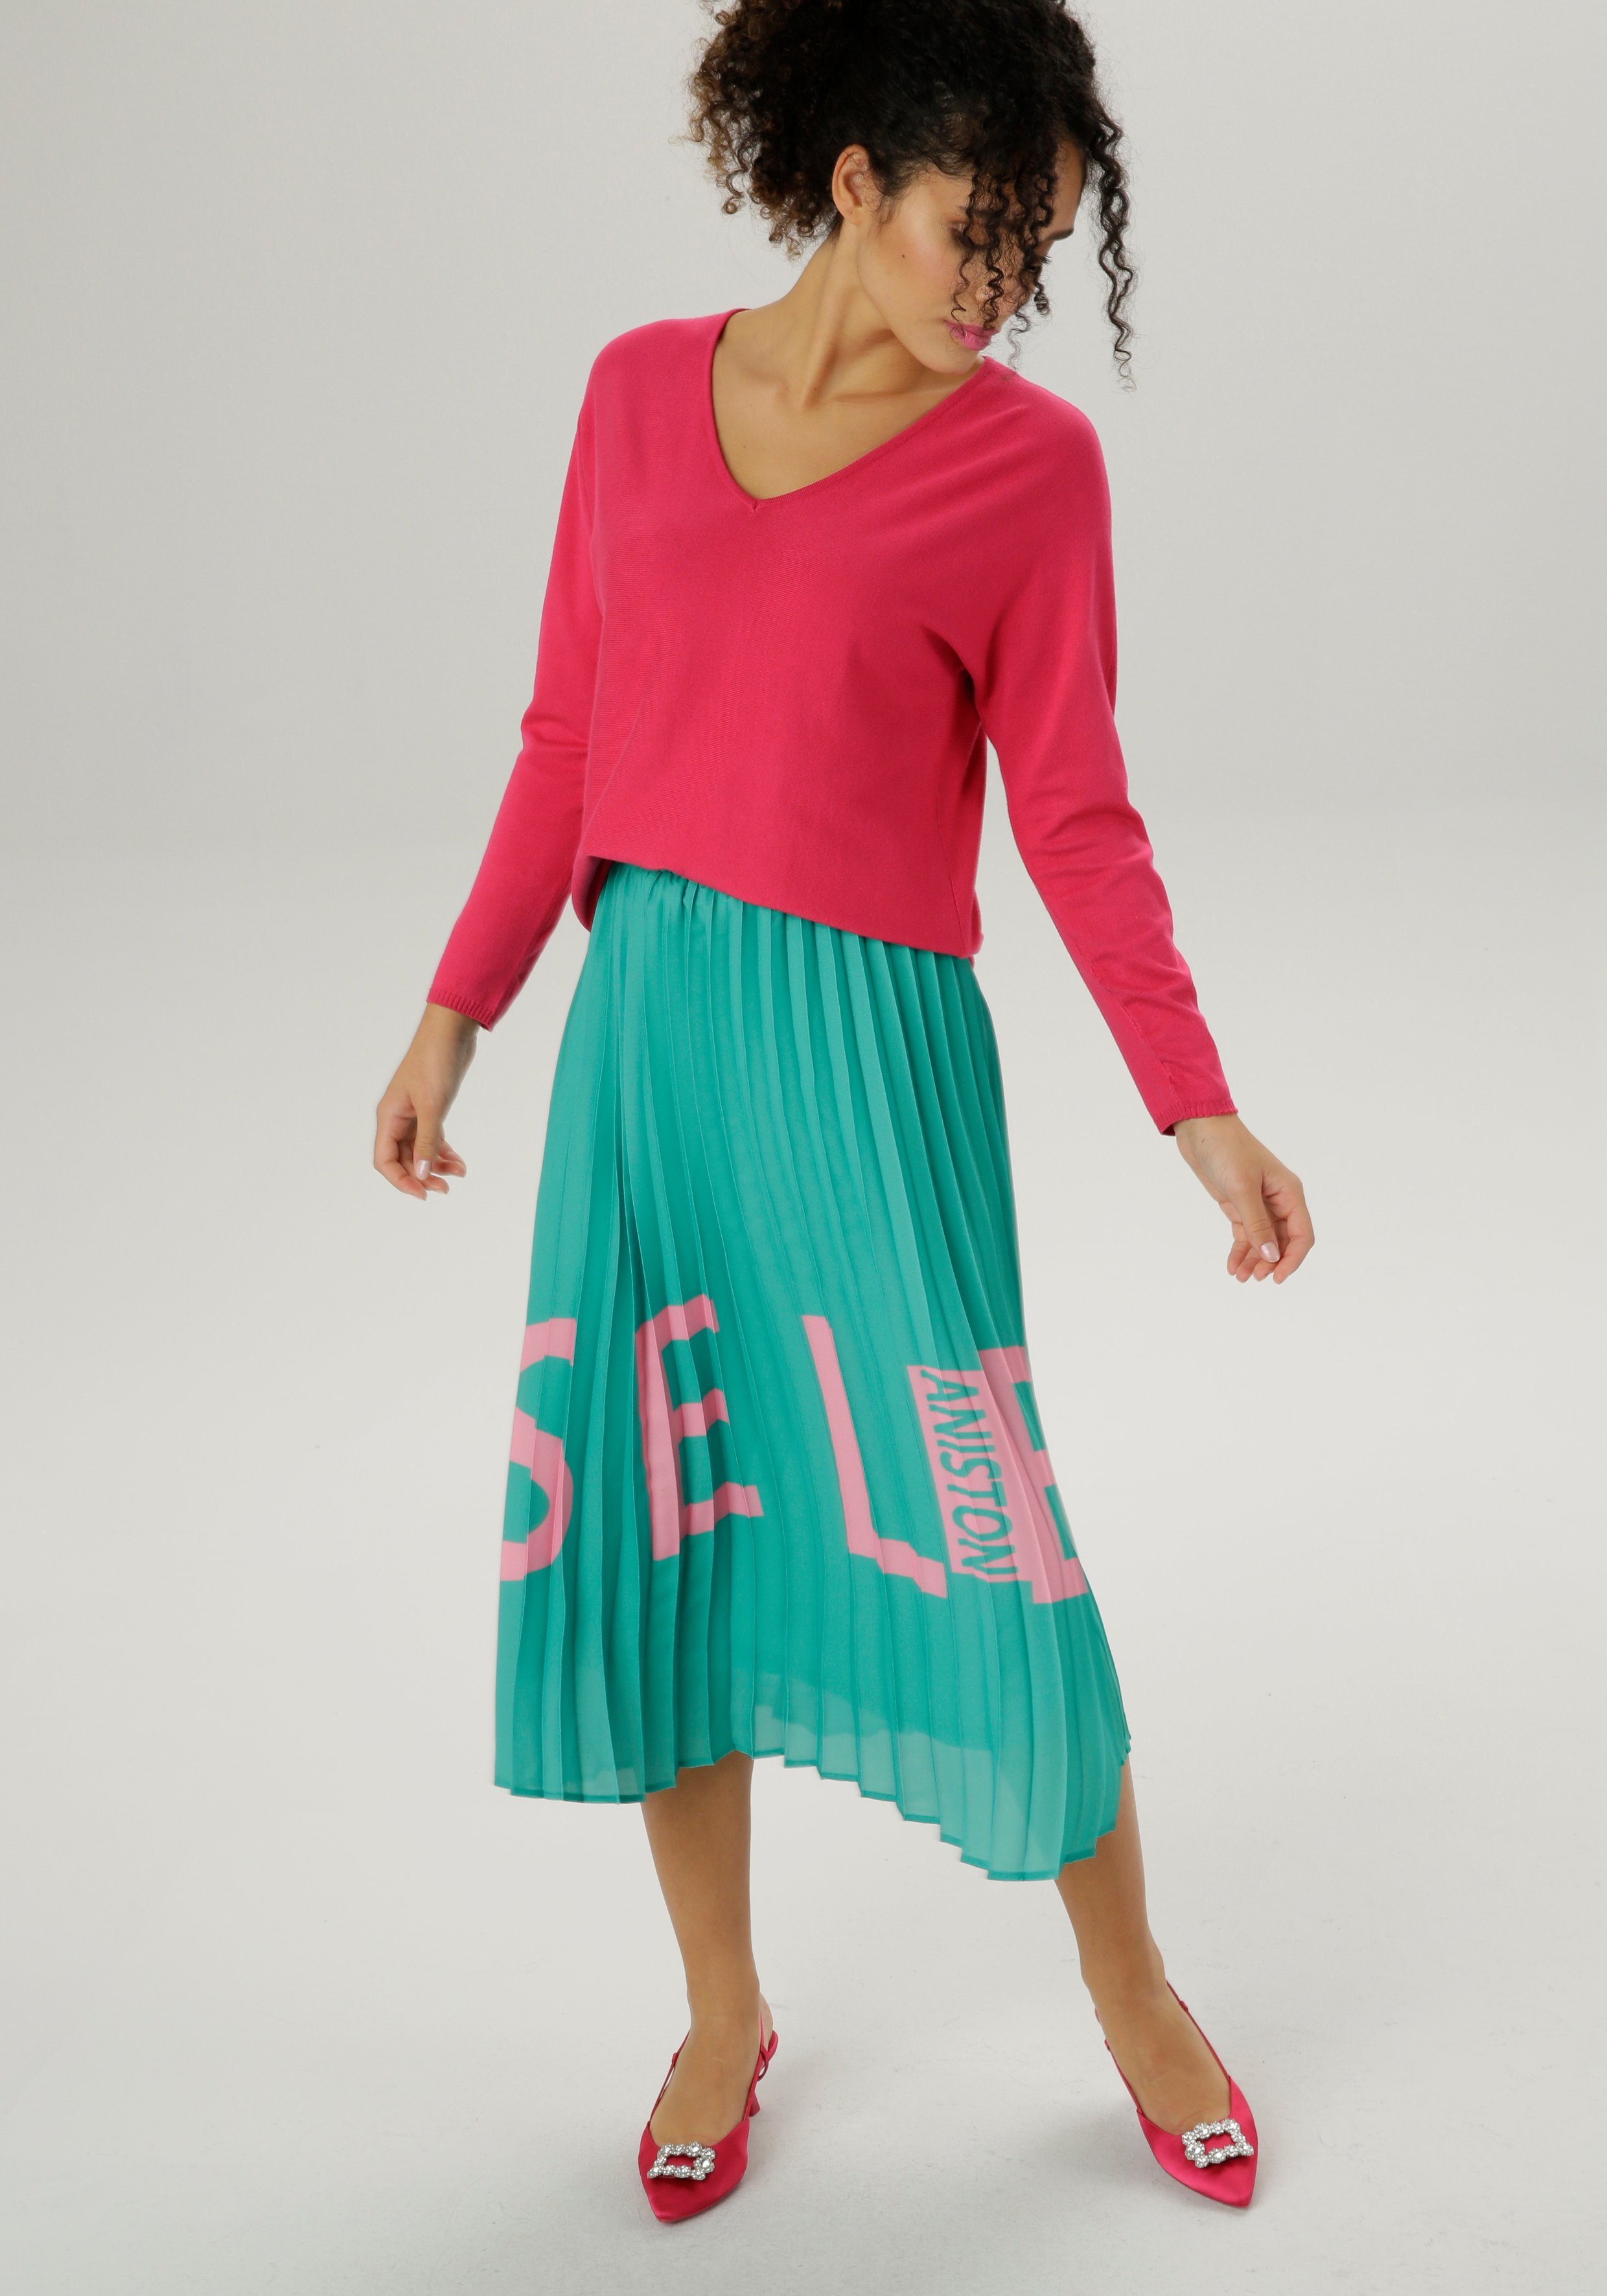 Aniston SELECTED Plisseerock mit Markenschriftzug Knallfarbe grün-pink in